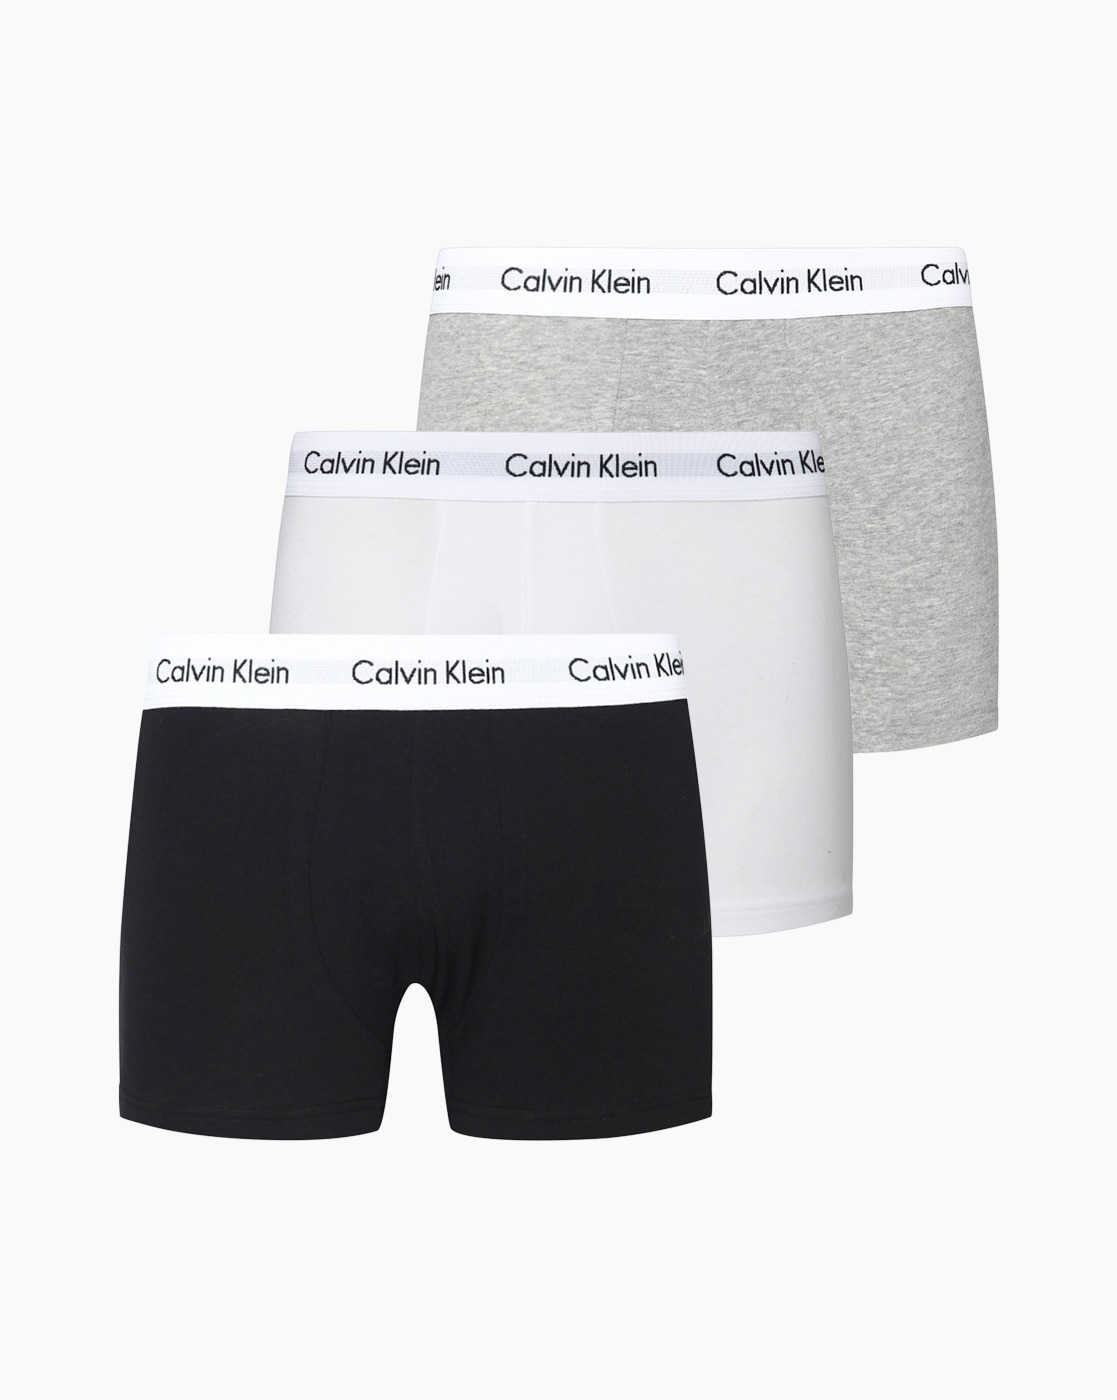 Calvin Klein Cotton Stretch Low Rise Trunk 3-Pack Black Multi